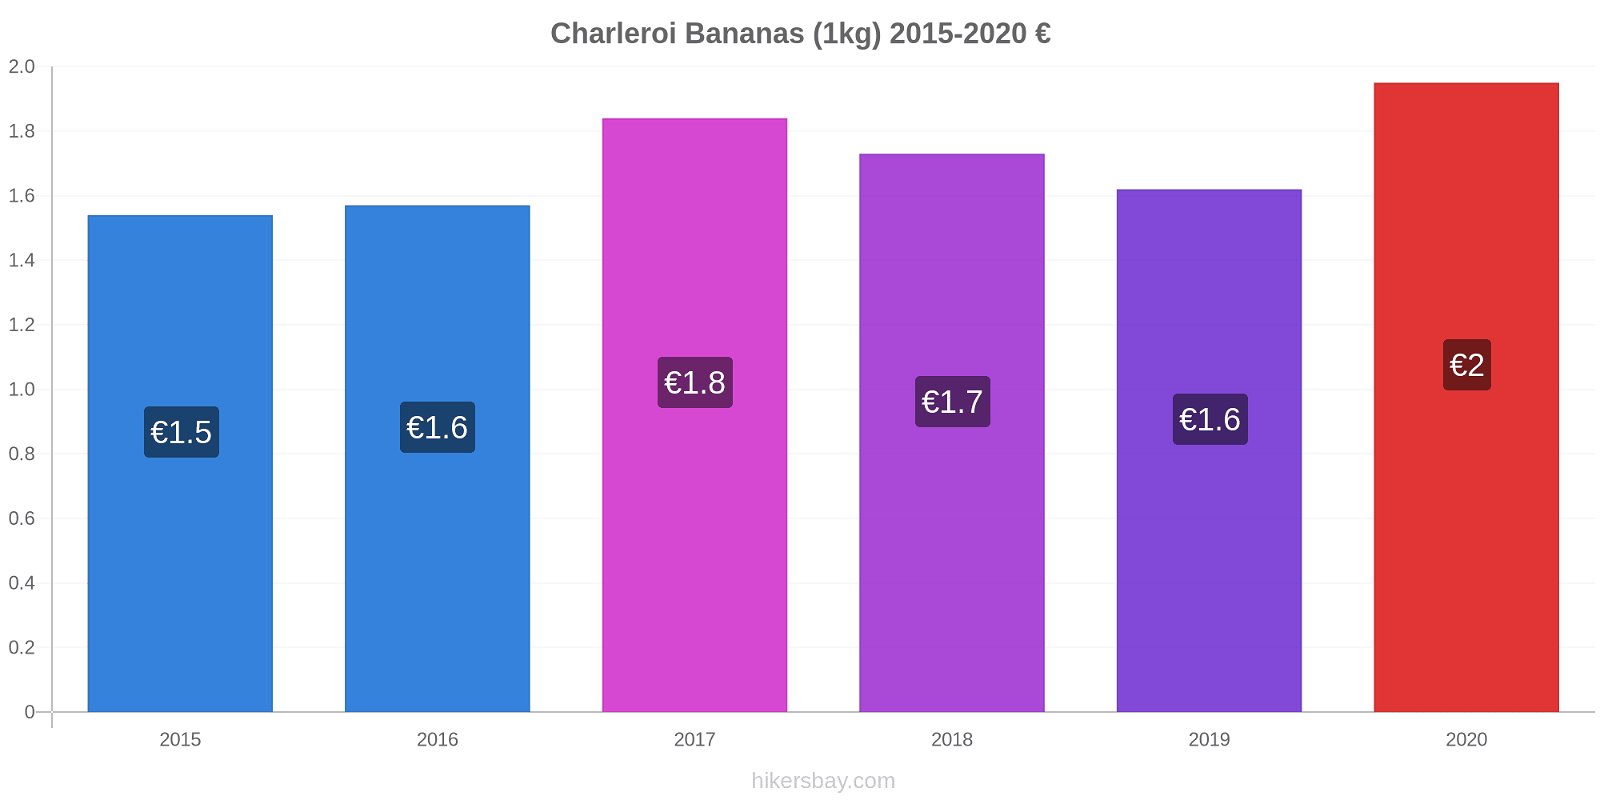 Charleroi price changes Bananas (1kg) hikersbay.com